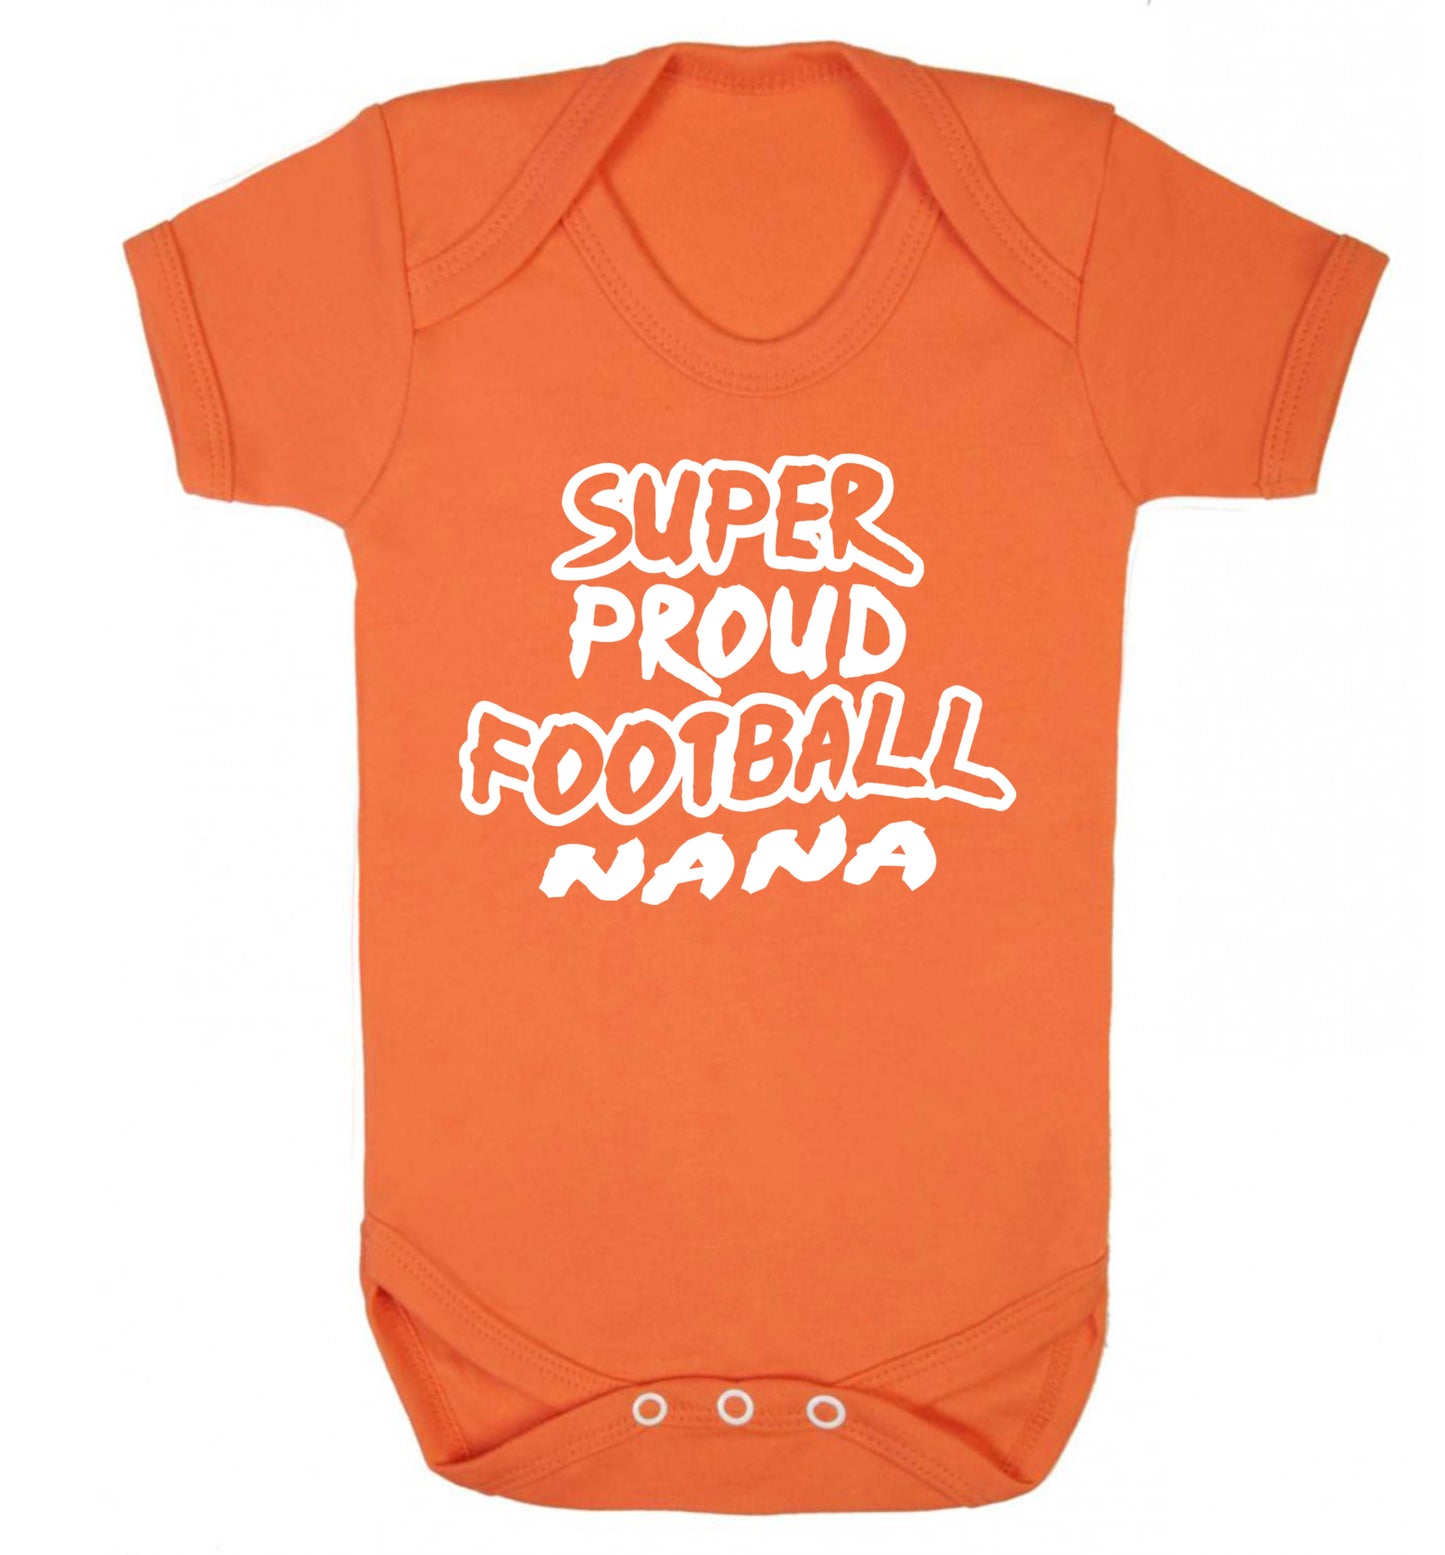 Super proud football nana Baby Vest orange 18-24 months